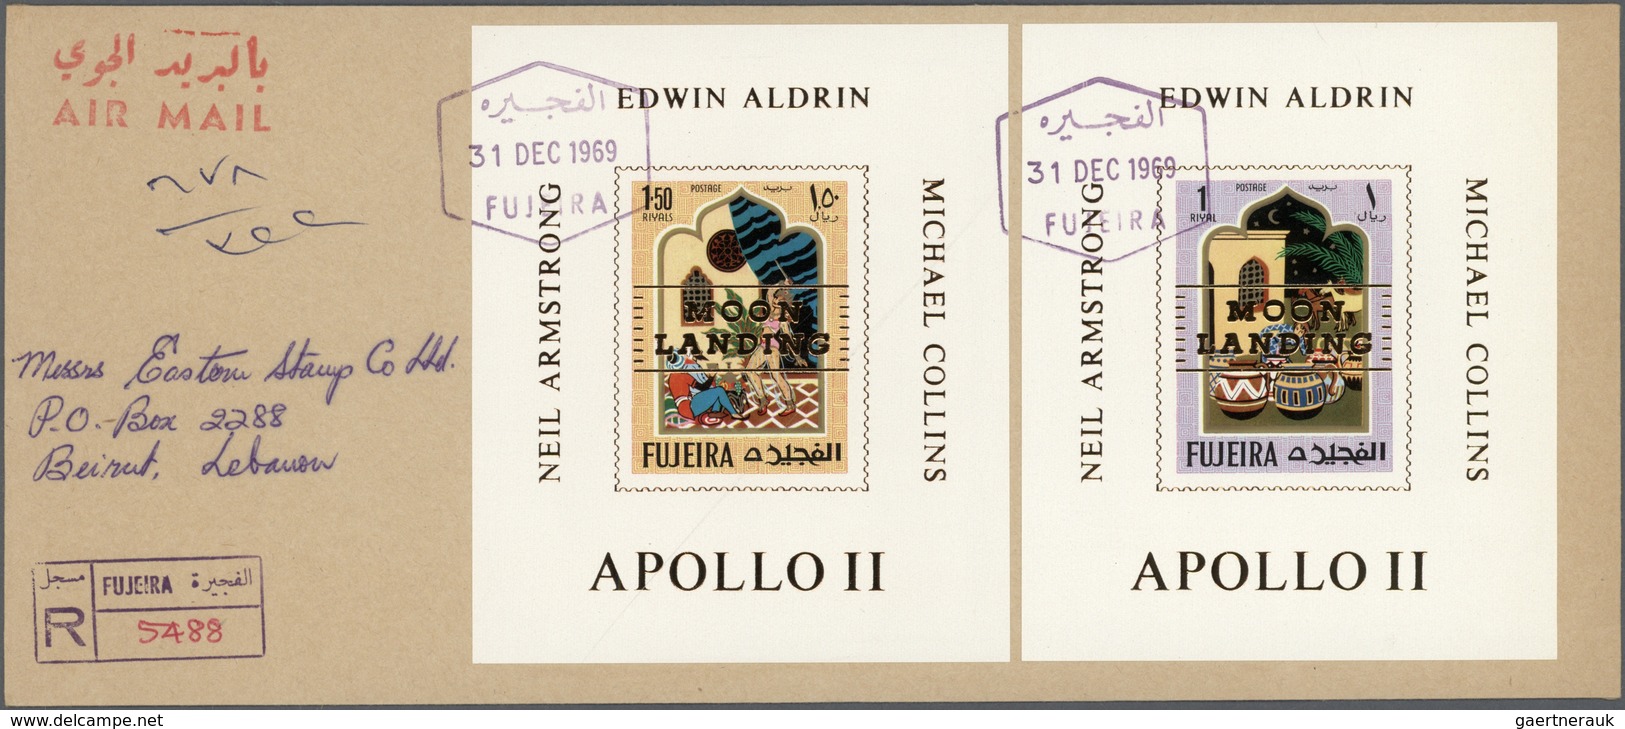 Thematik: Raumfahrt / astronautics: 1969, Fudschaira/Fujeira, MOON LANDING, golden overprint on twel